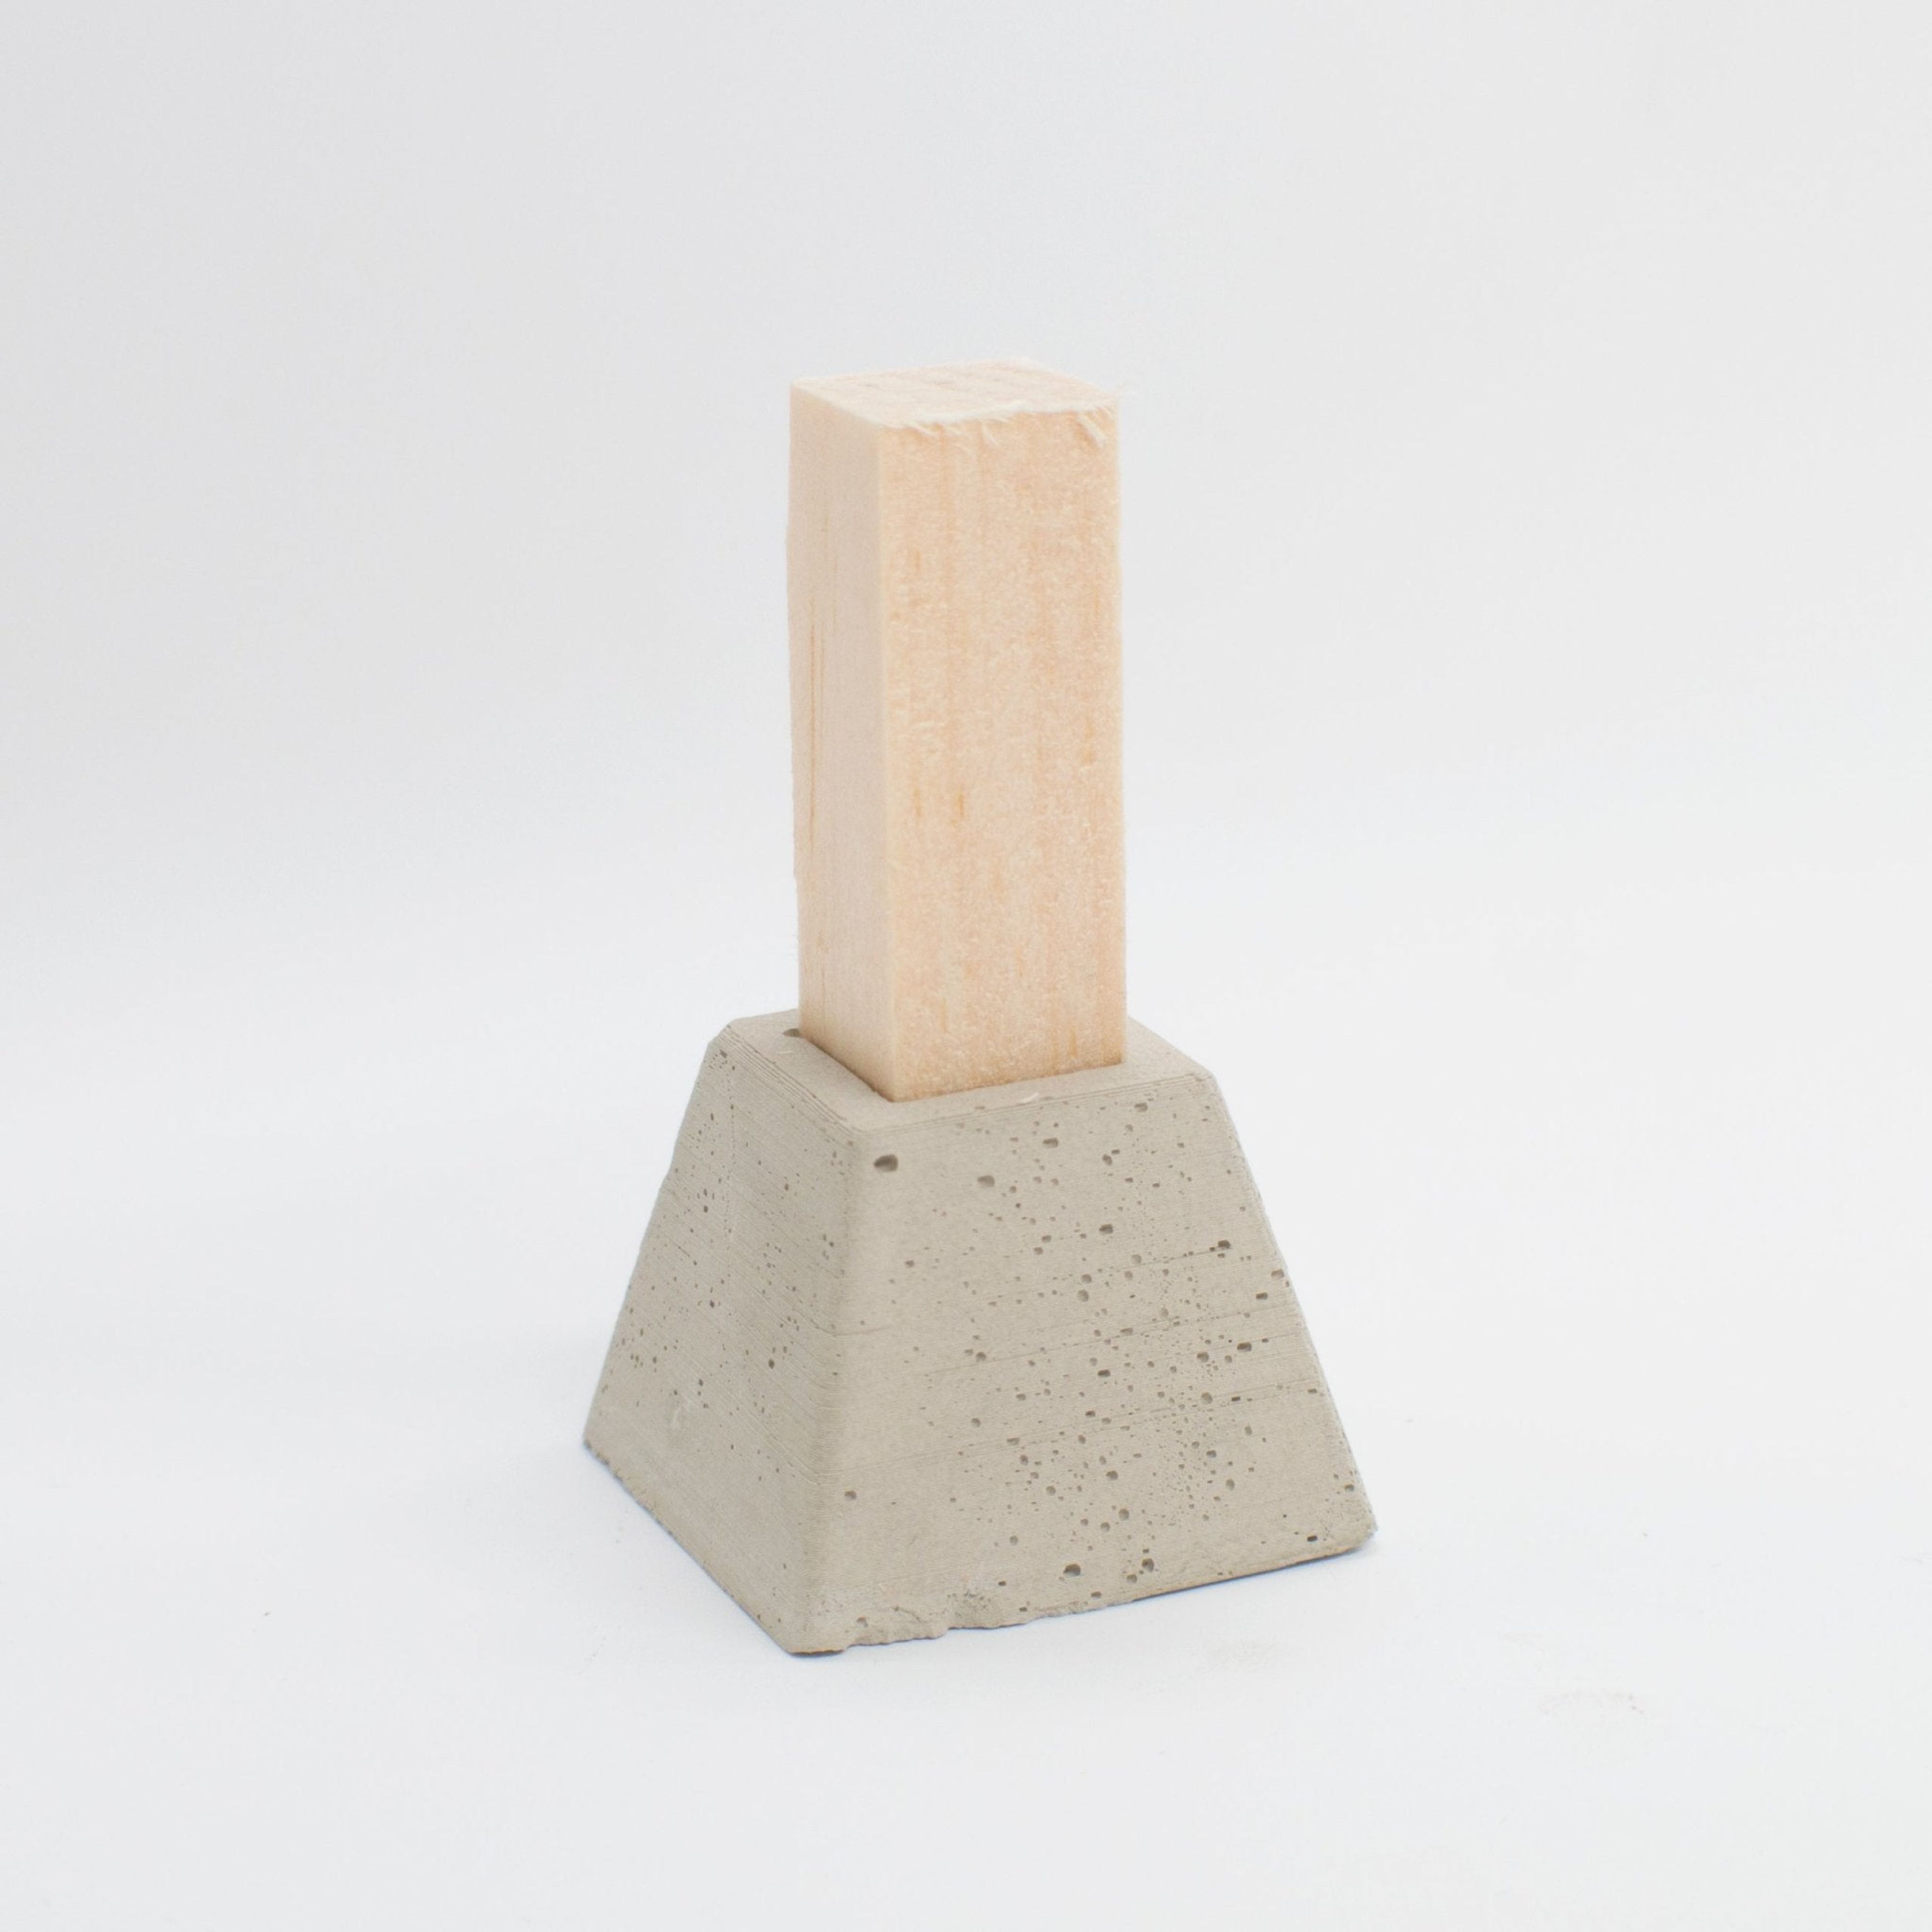 1:12 Scale Concrete Deck Block (4 pack)